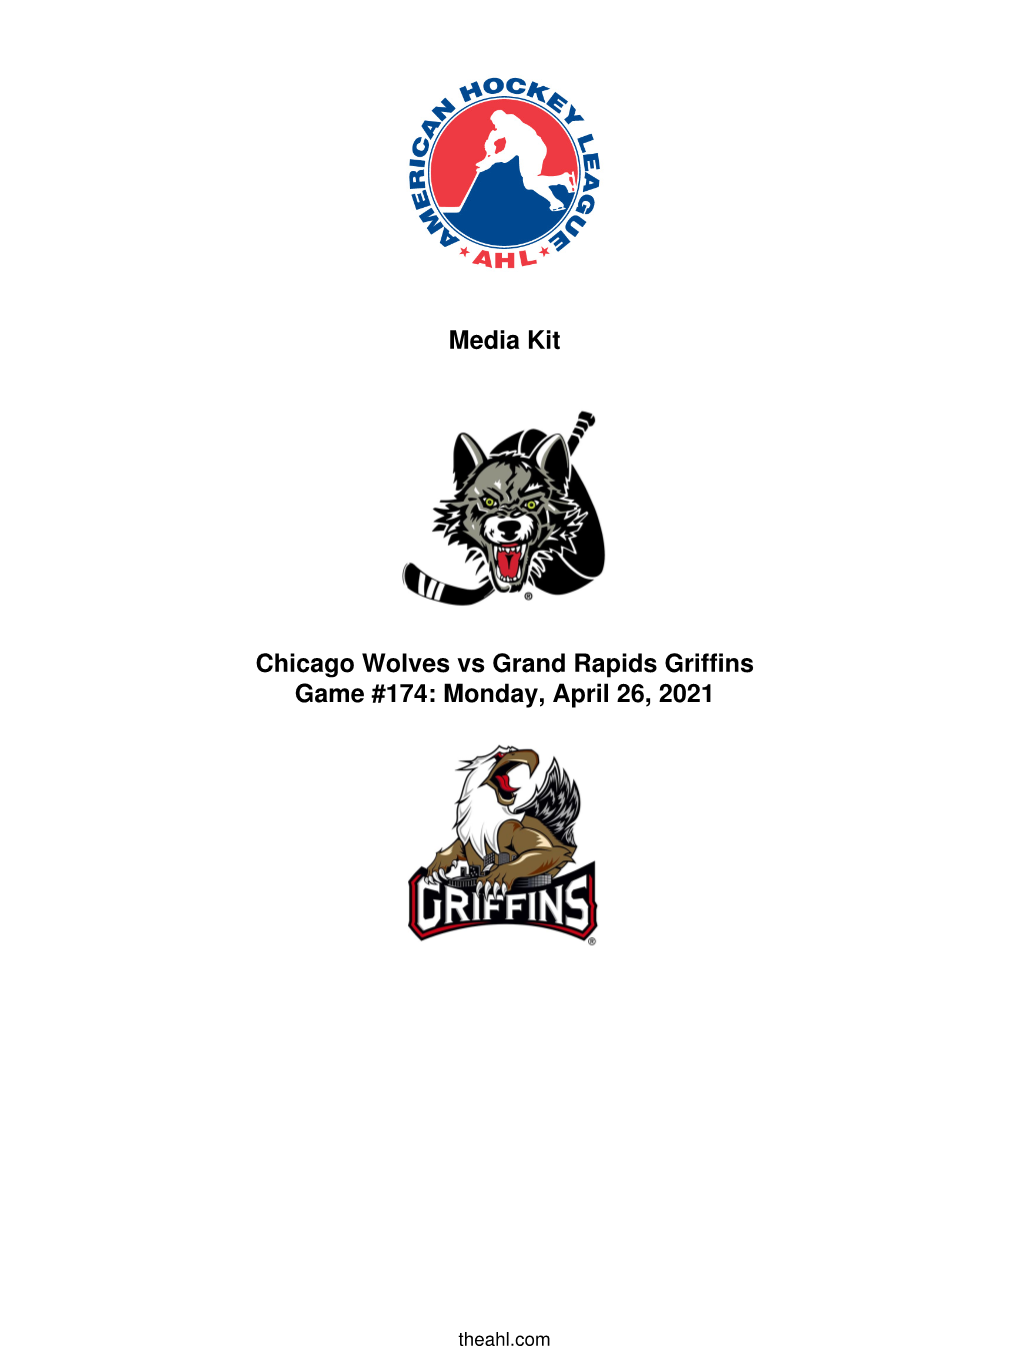 Media Kit Chicago Wolves Vs Grand Rapids Griffins Game #174: Monday, April 26, 2021